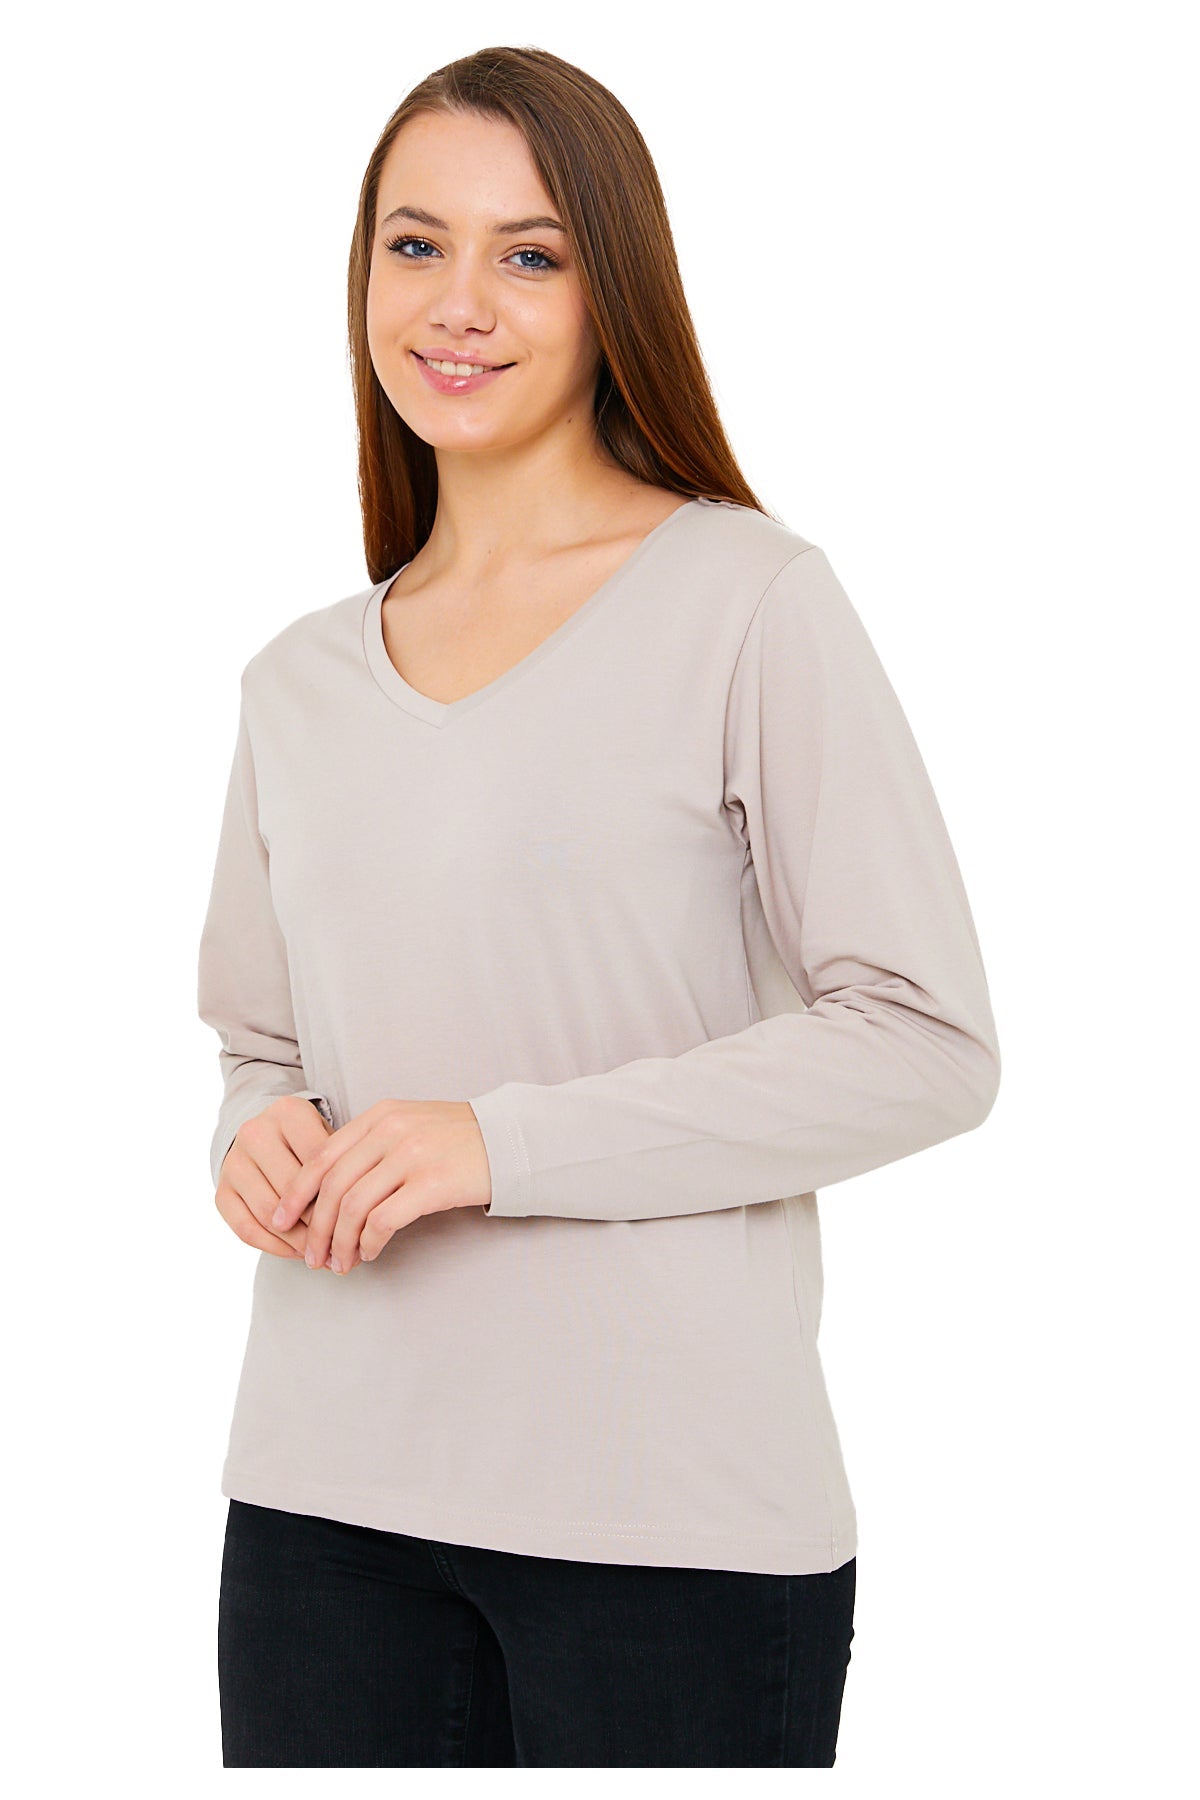 Long Sleeve V-Neck Shirts for Women & Girls - Colorful Pima Cotton-78